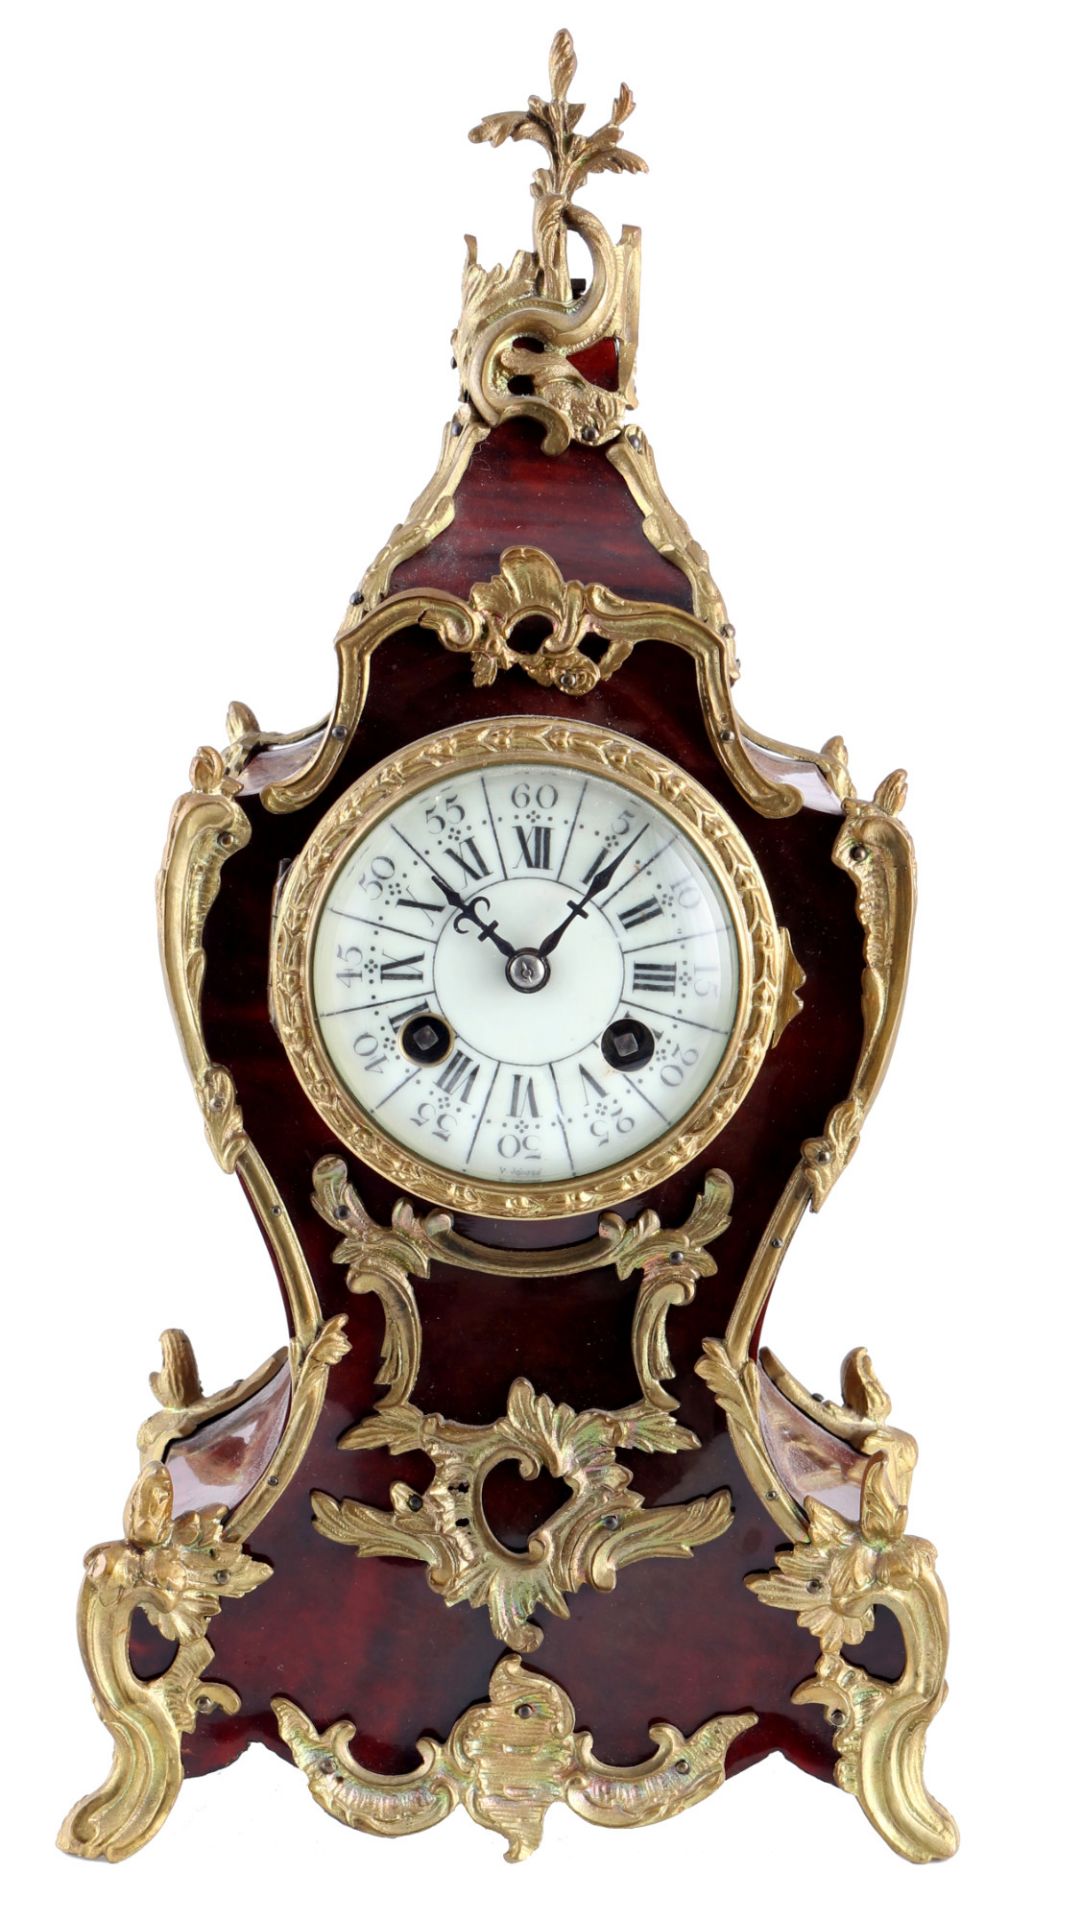 French mantel boulle mantel clock 19th century, Tischuhr / Boulleuhr, Frankreich 19. Jahrhundert,